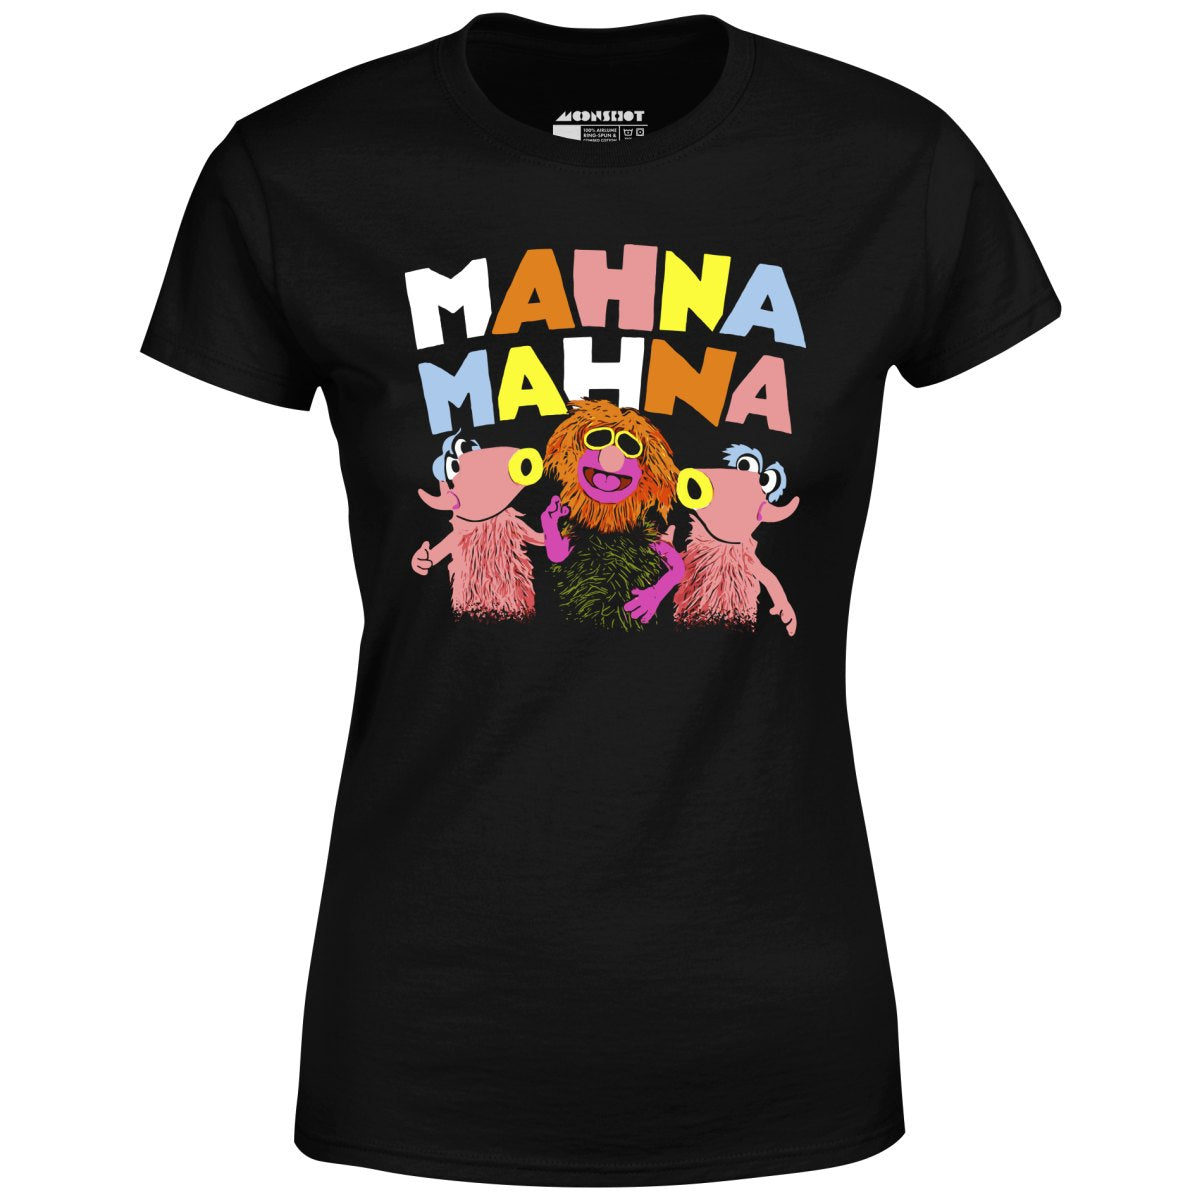 Mahna Mahna - Women's T-Shirt